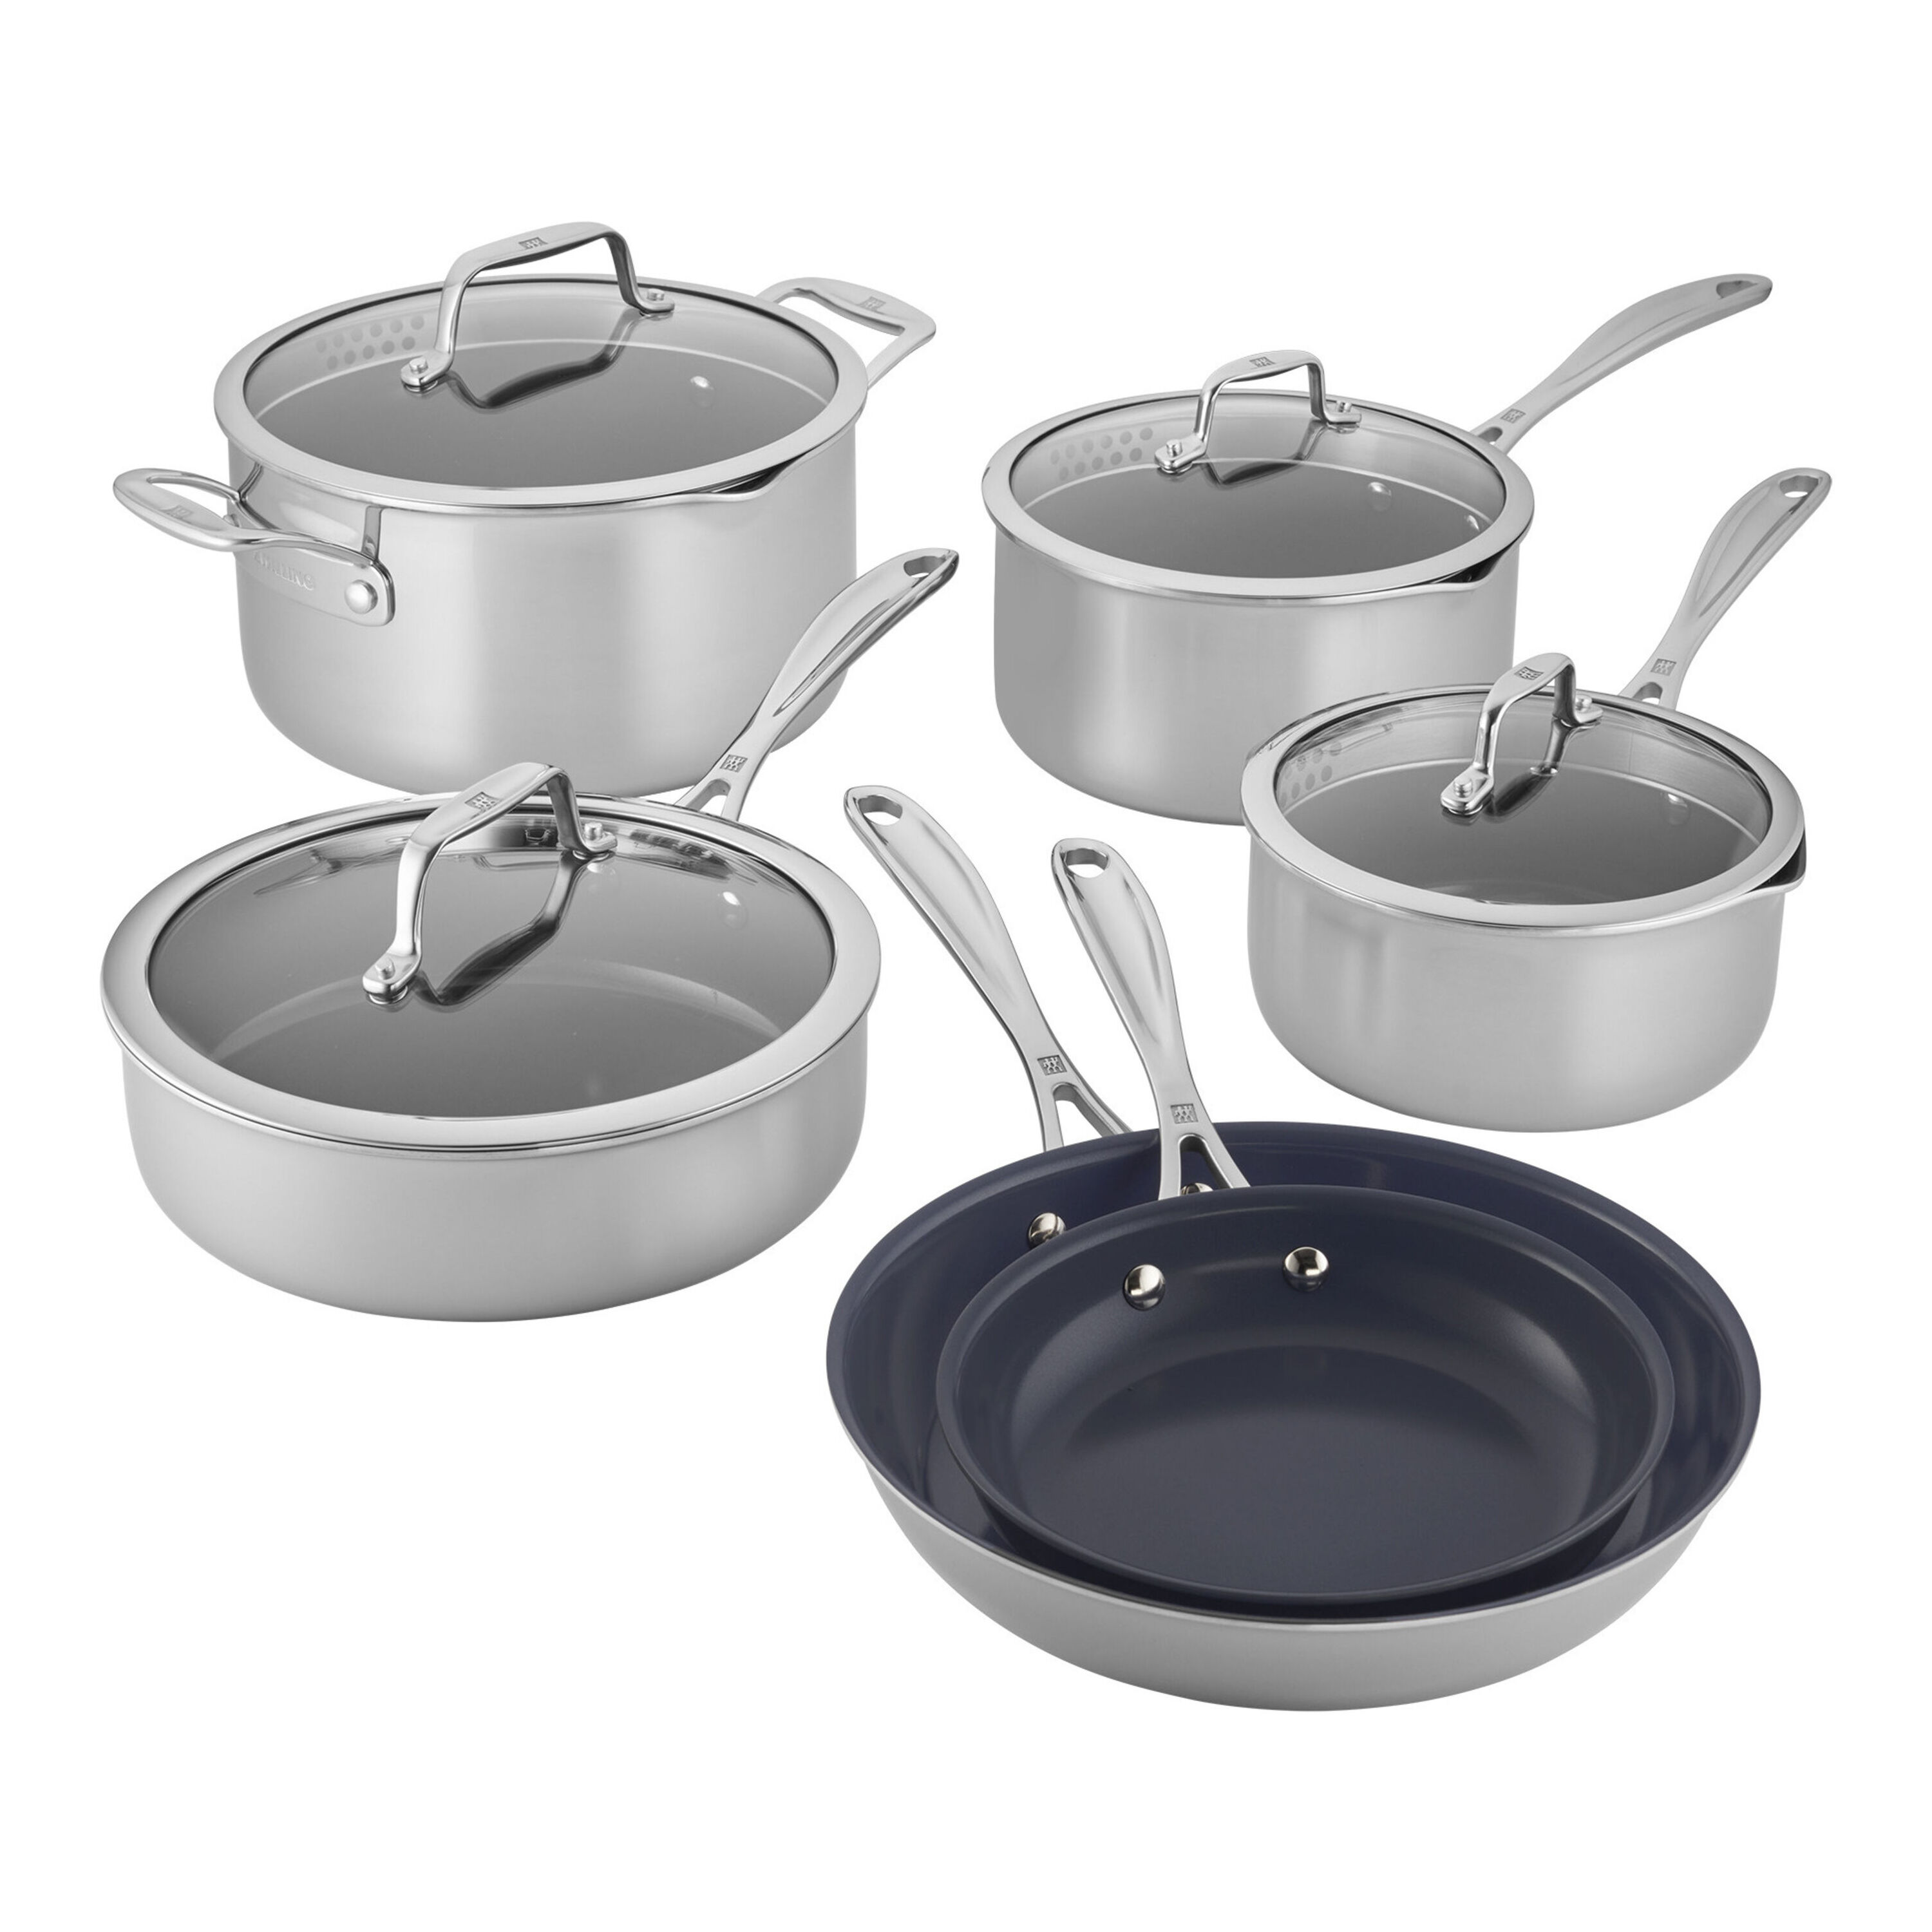 ZWILLING J.A. Henckels VistaClad 5-piece Stainless Steel Cookware Set